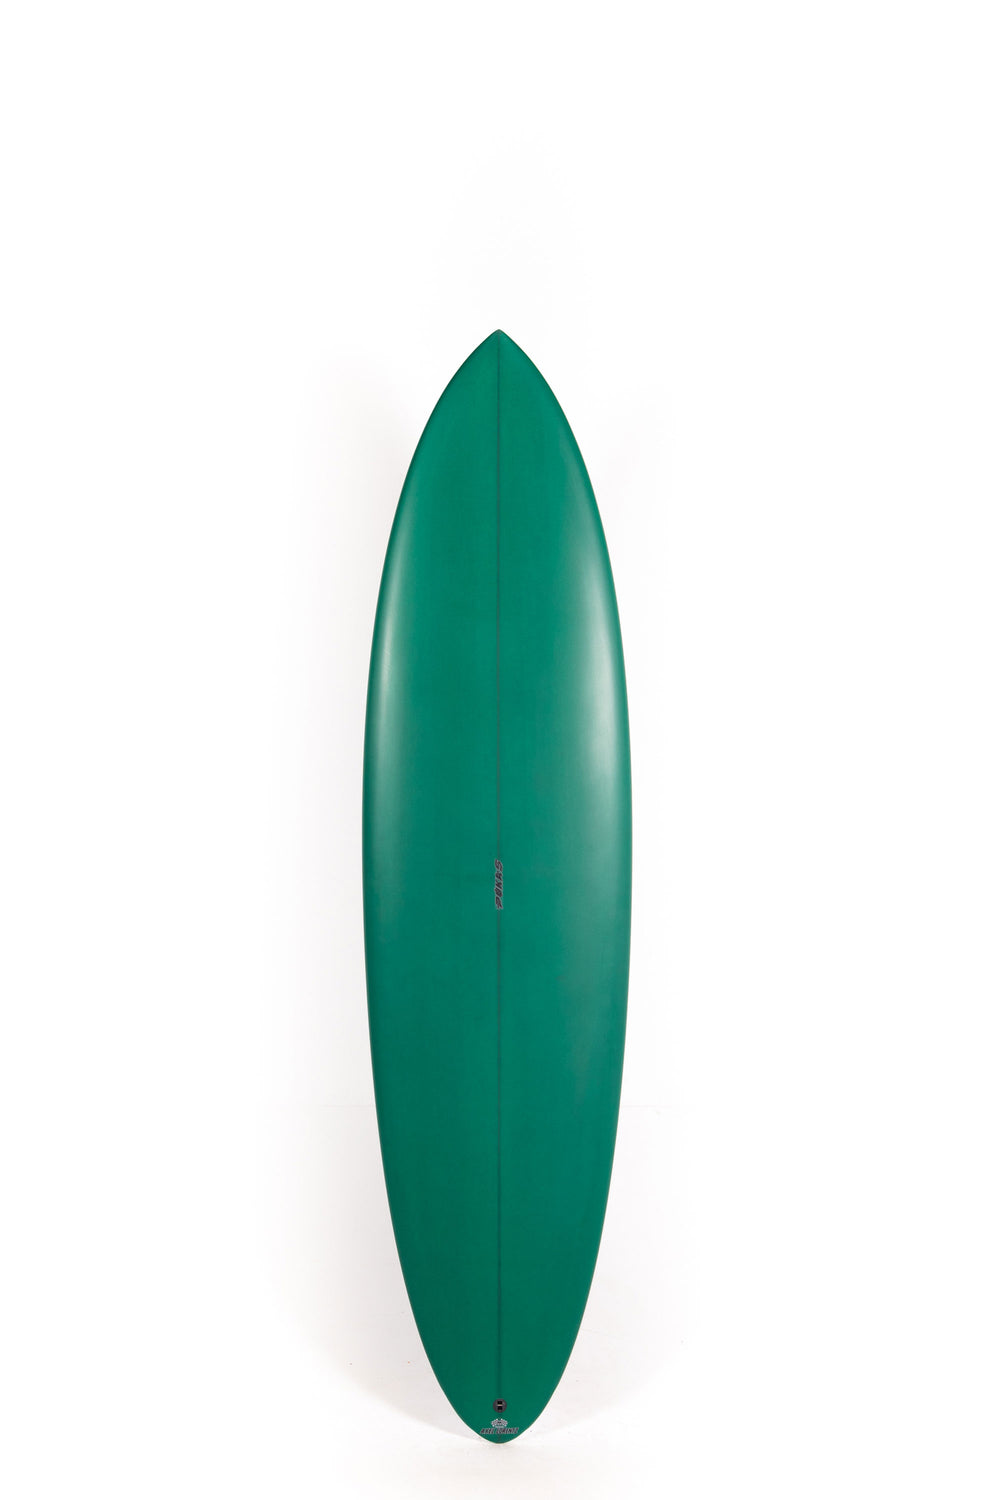 Pukas Surf Shop Pukas Surfboards Lady Twin 7'2